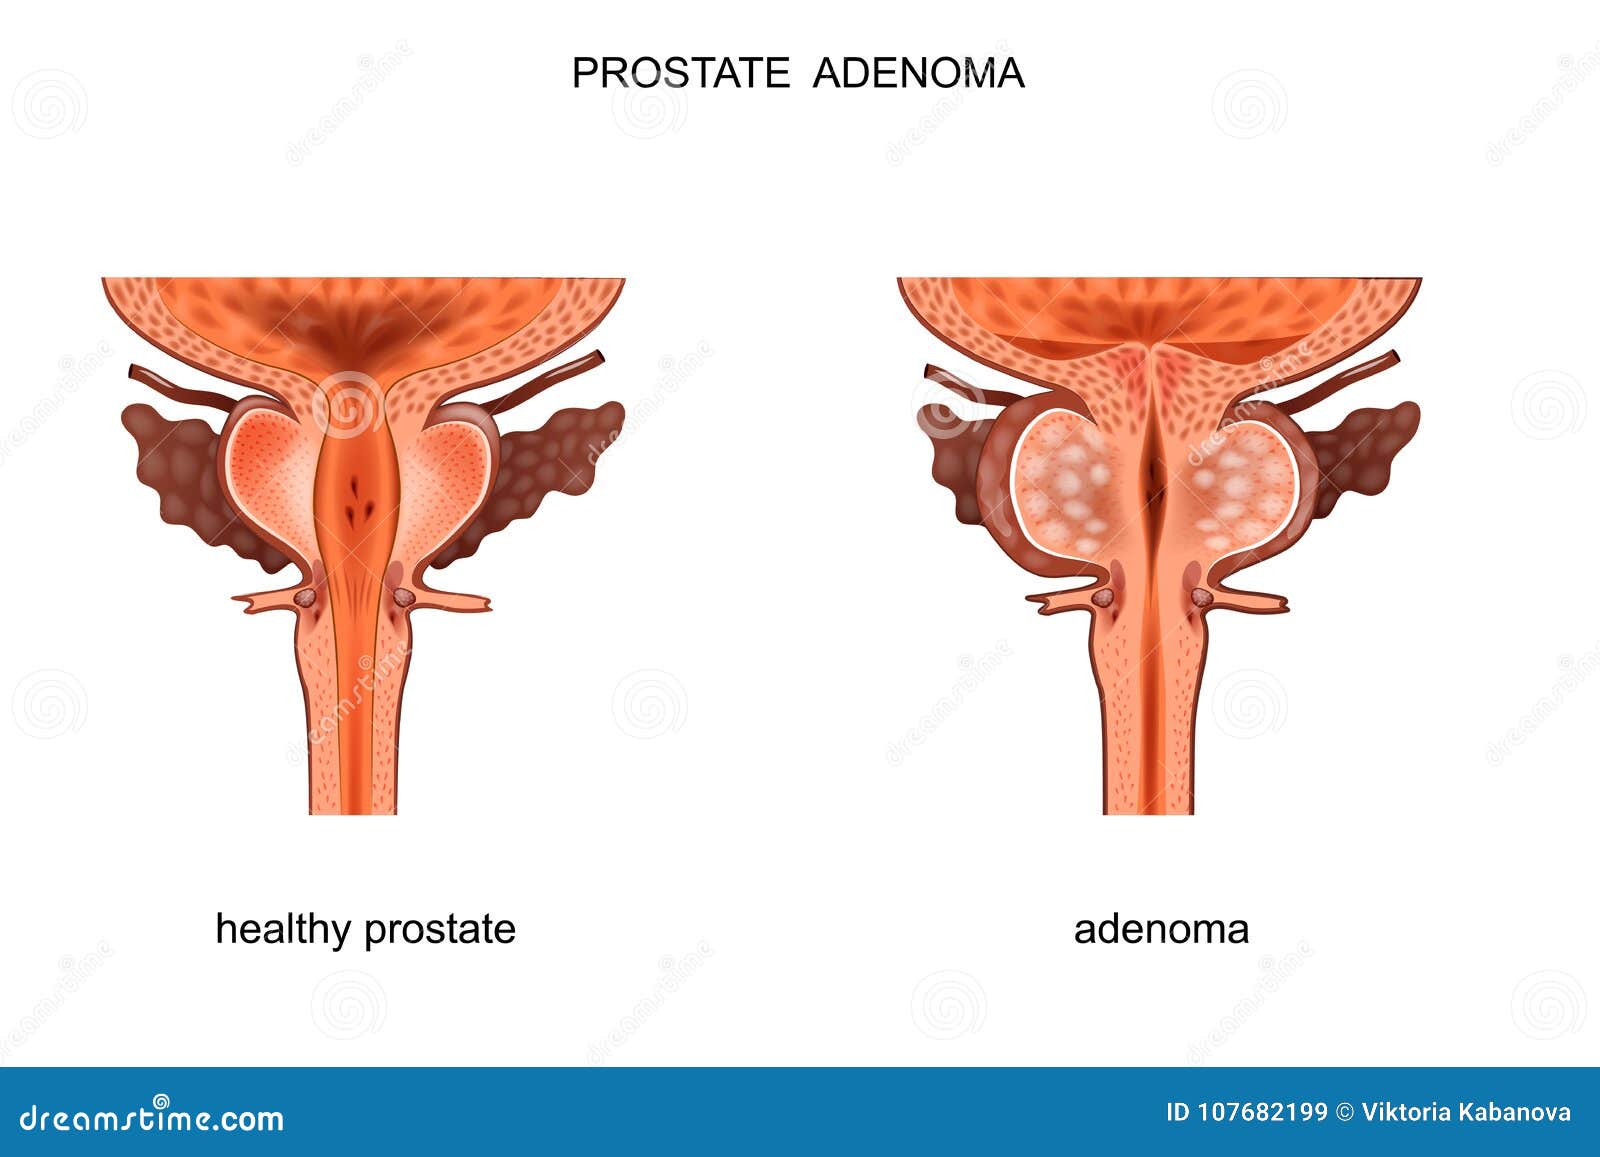 medicament prostatita adenom